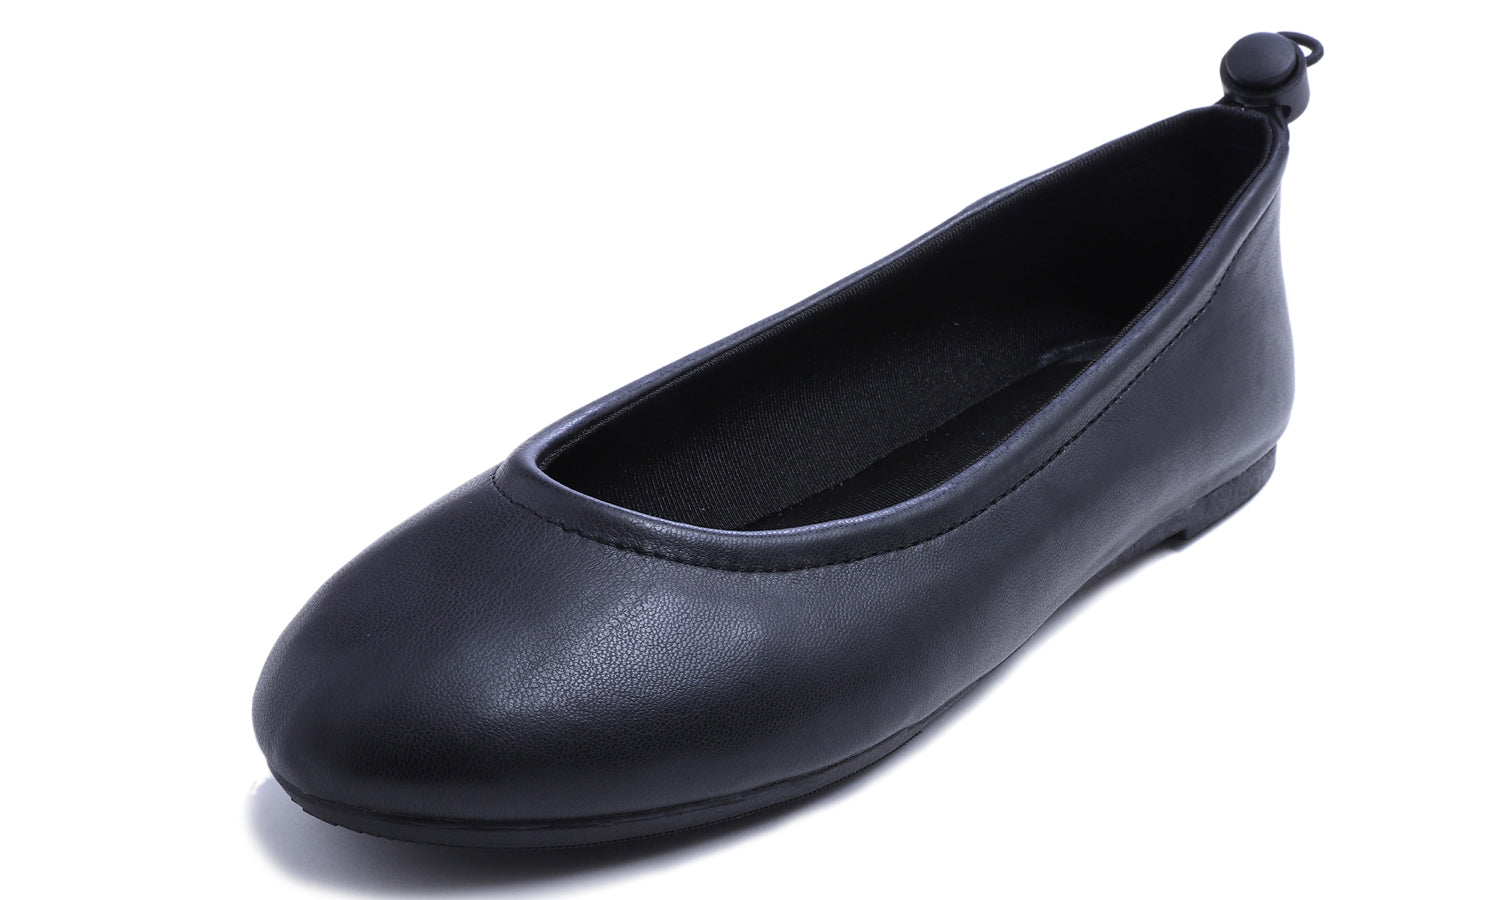 Feversole Women's Soft Cushion Comfort Round Toe Elastic Adjustable Ballet Flats Flexible Walking Shoes Black Napa